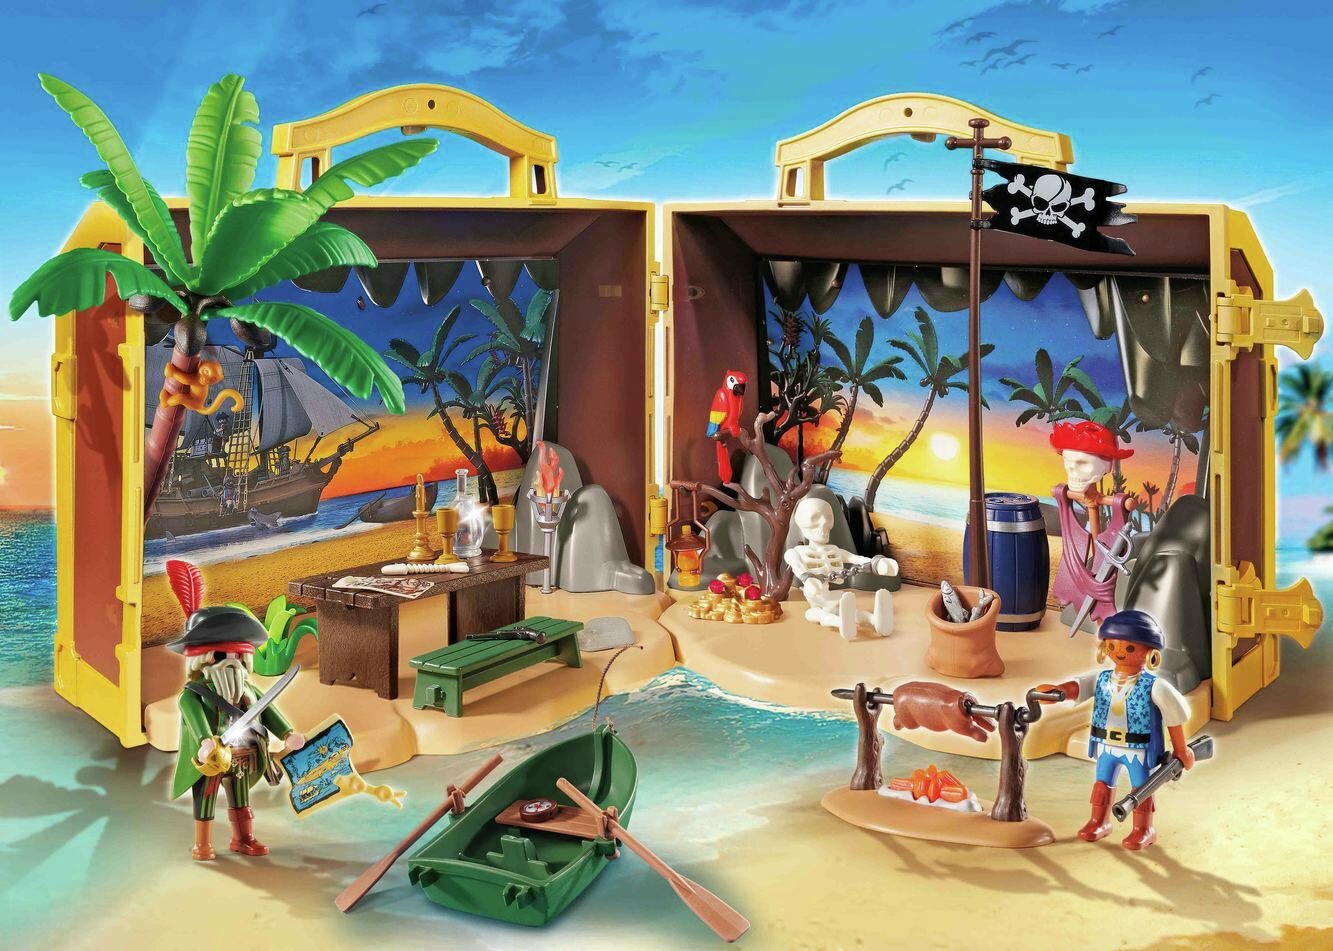 Playmobil 70150 Take Along Pirate Island Review